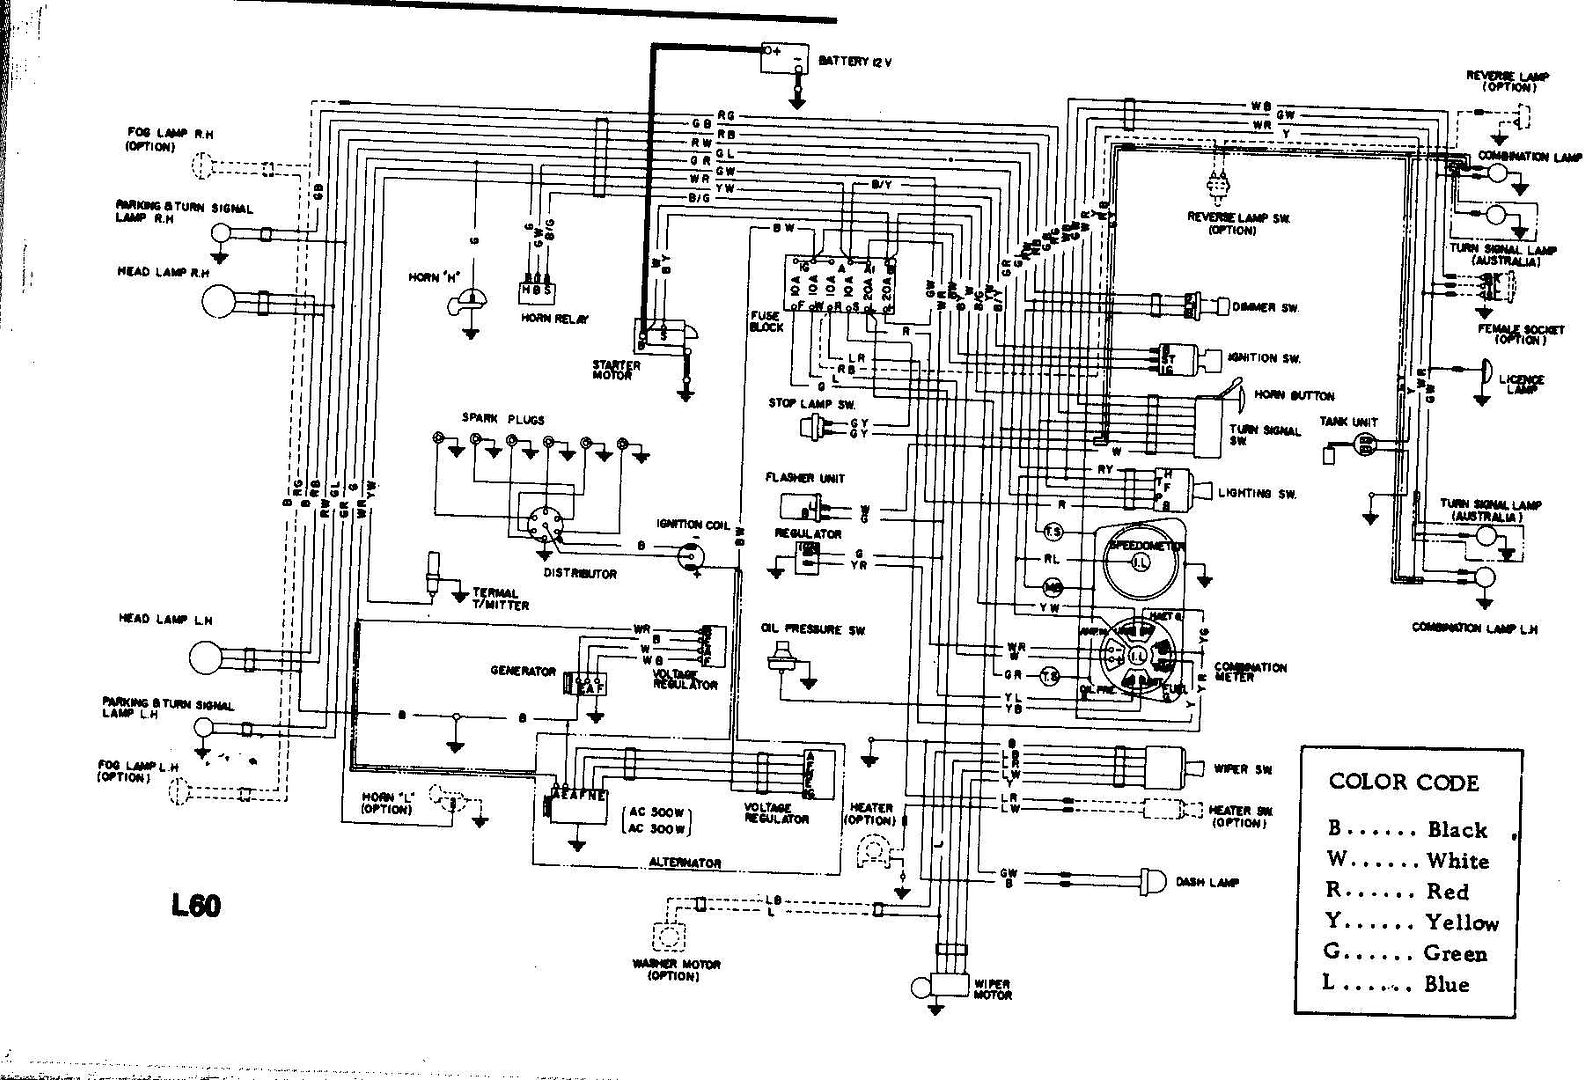 Nissan patrol 1989 wiring diagram #2